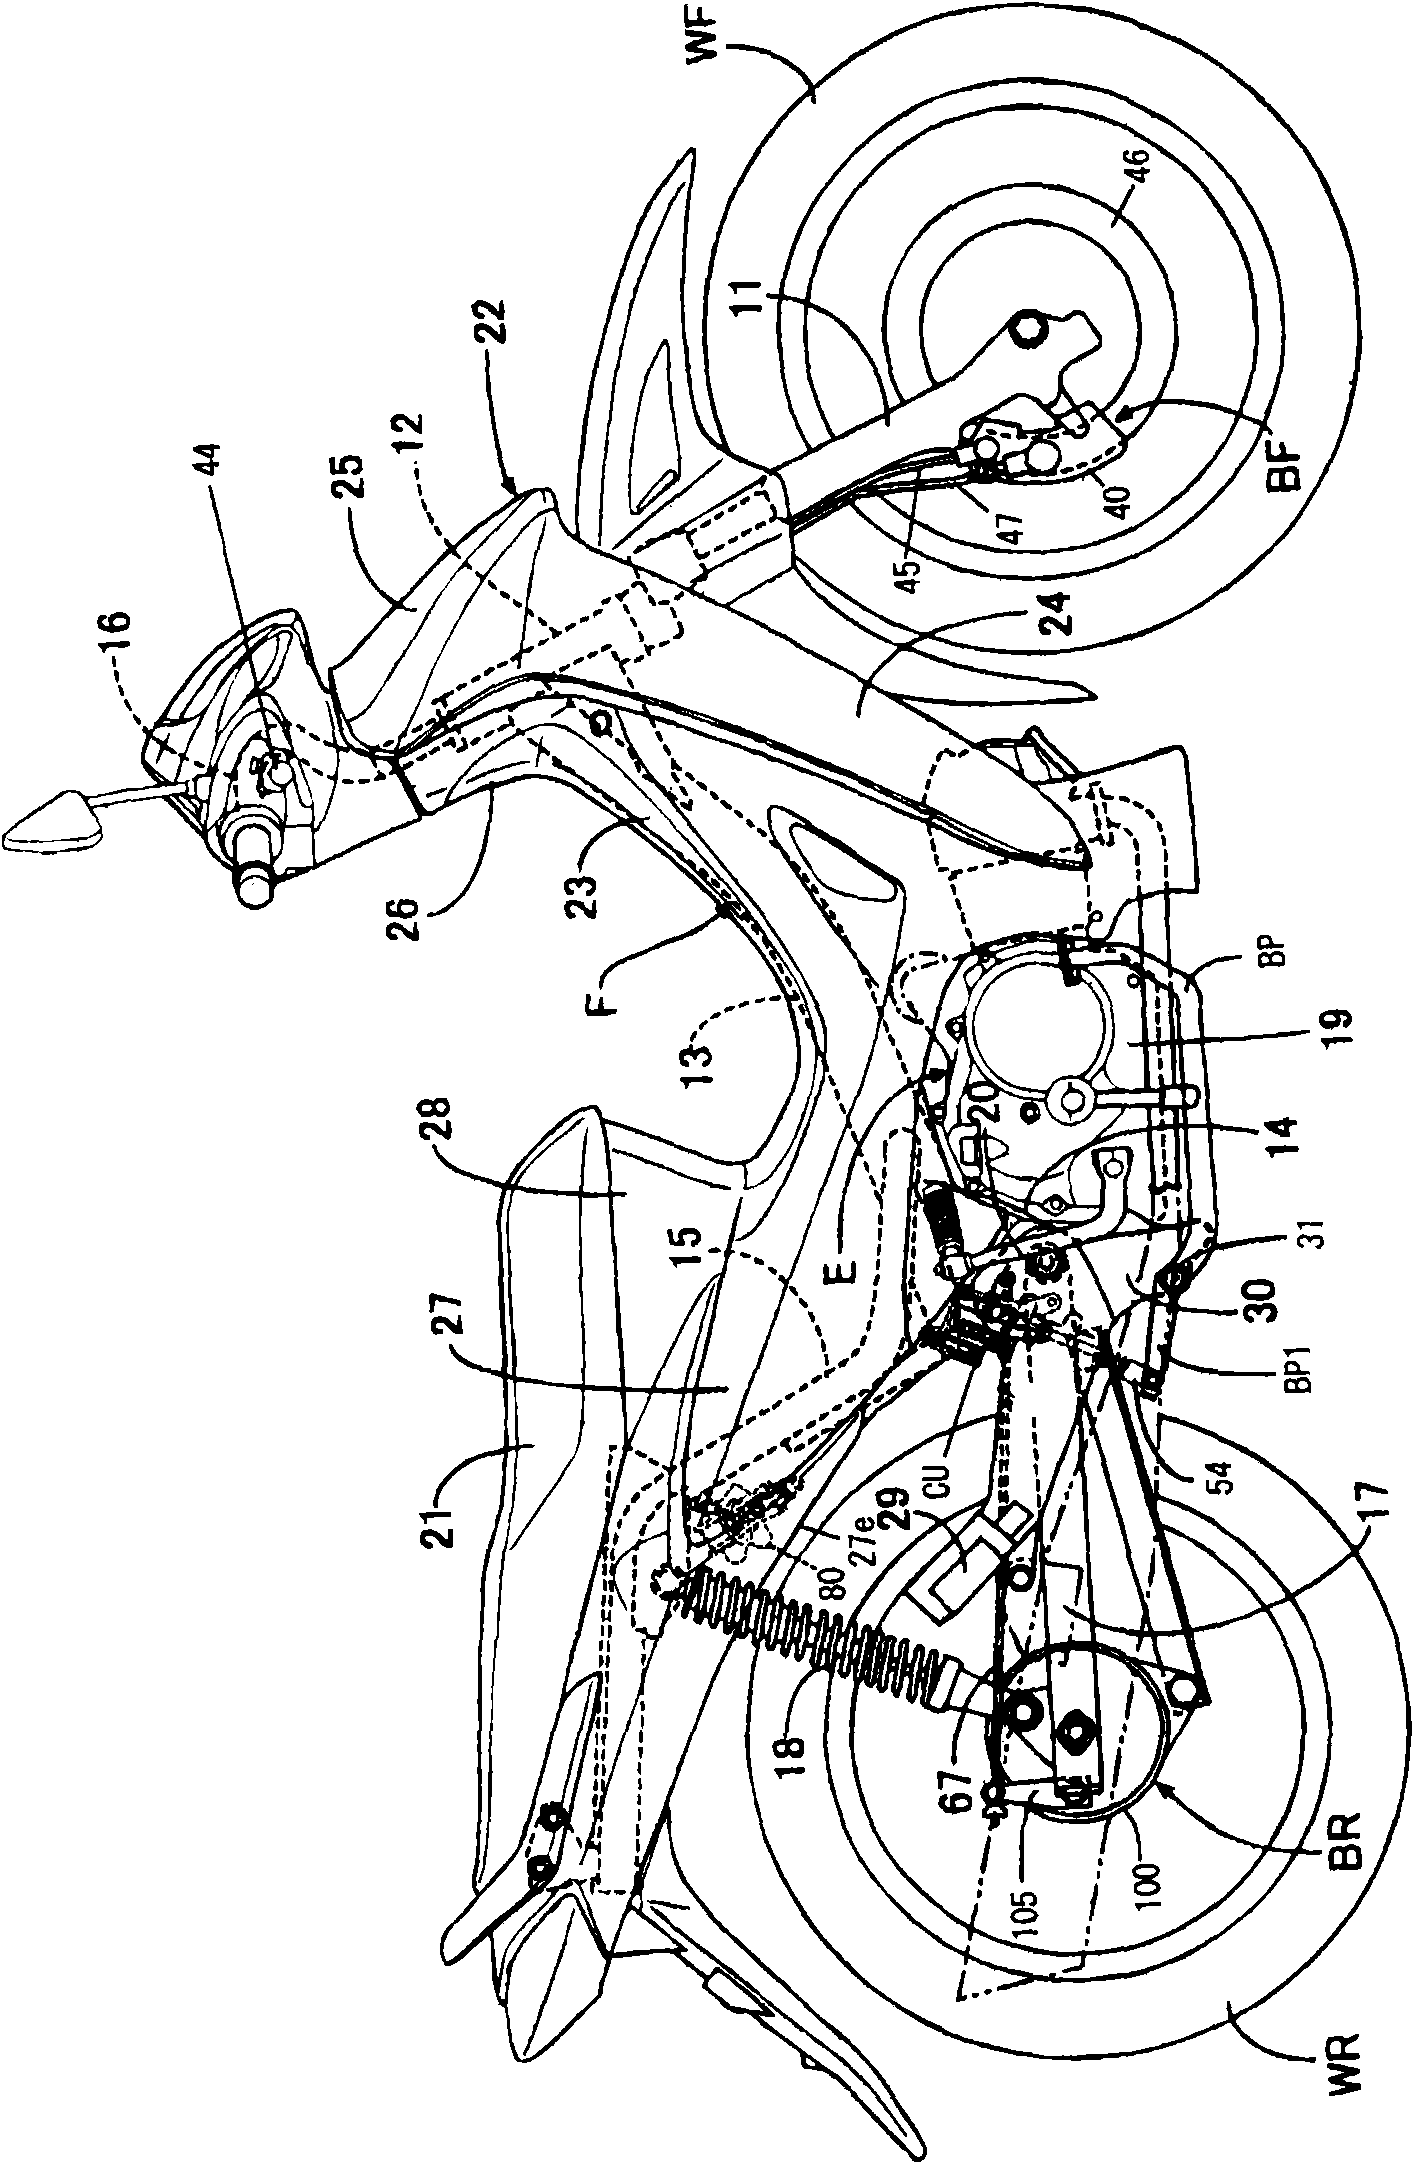 Interlocked brake device for two-wheel motorcycle